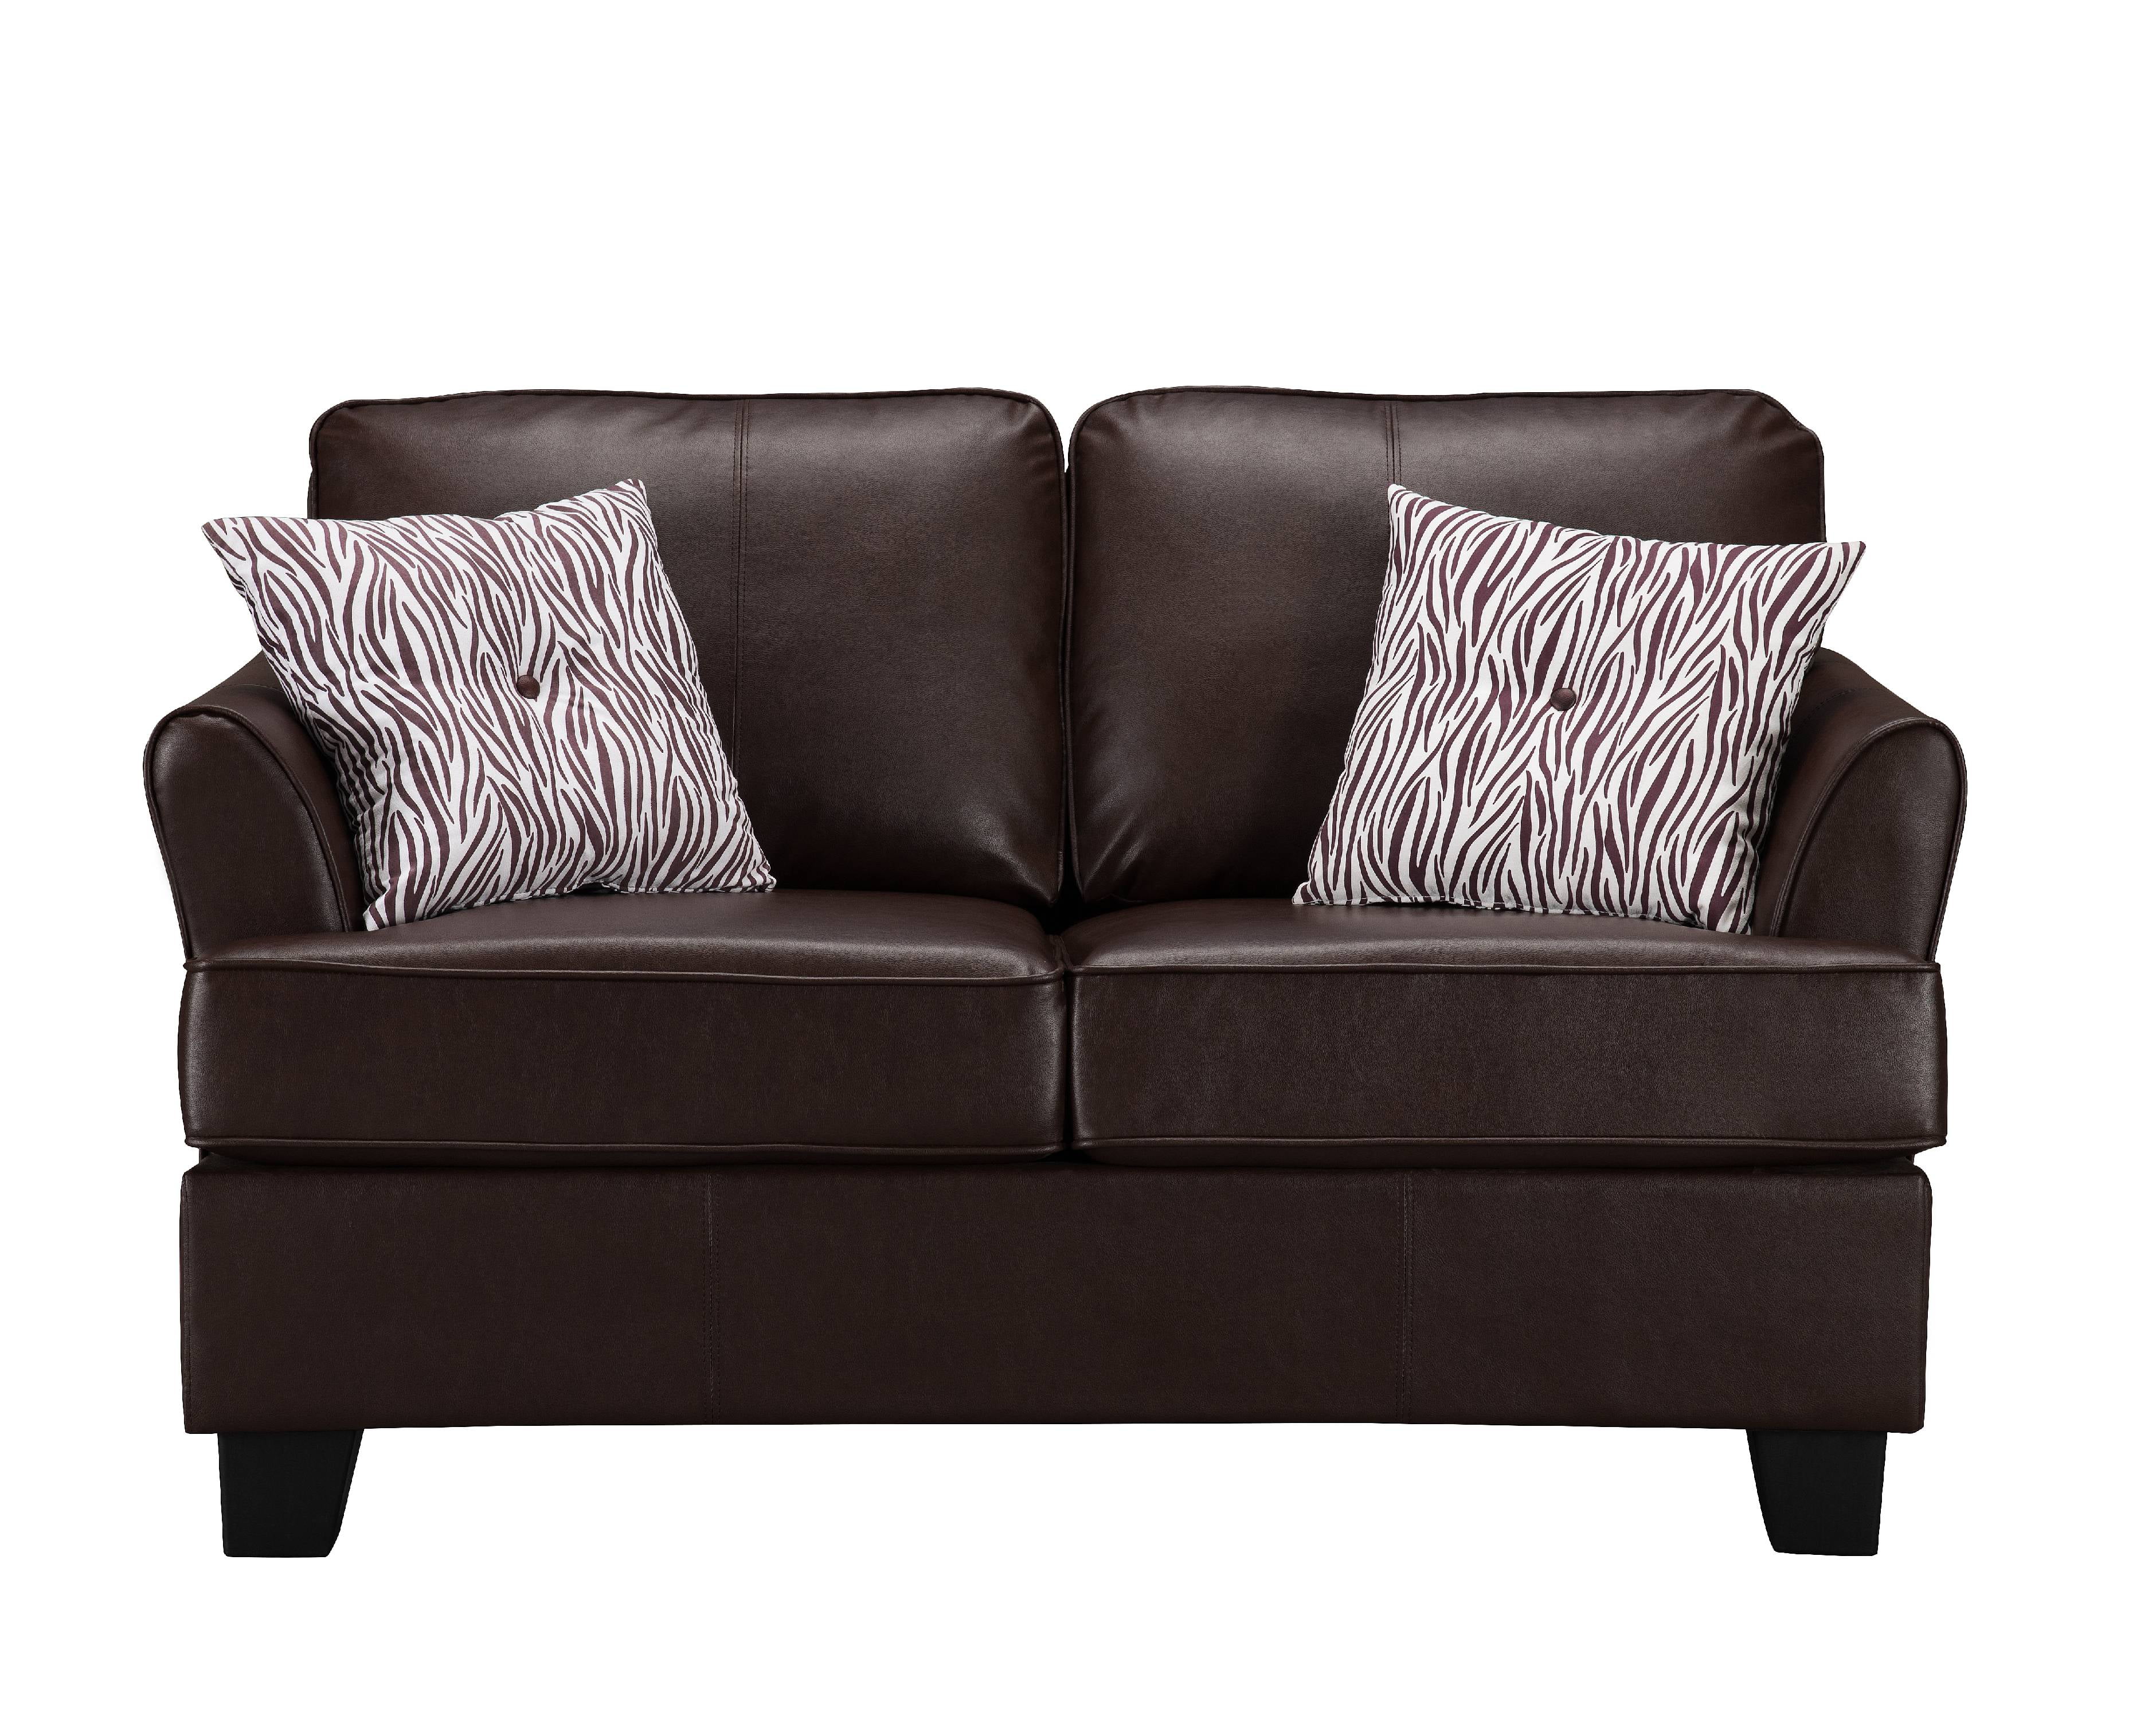 leather twin sleeper sofa